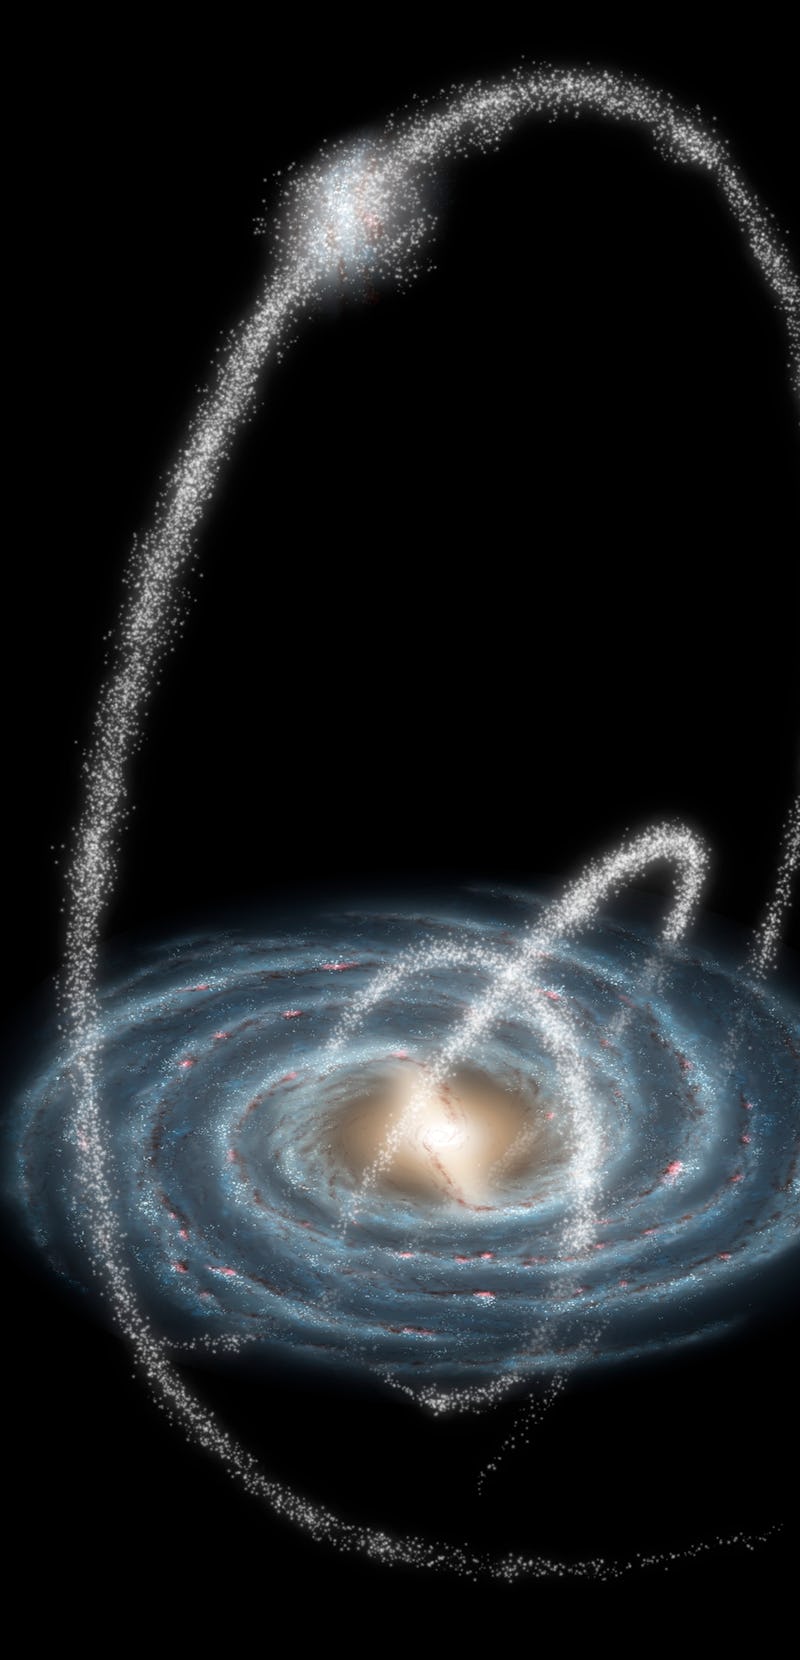 Star streams surrounding the Milky Way